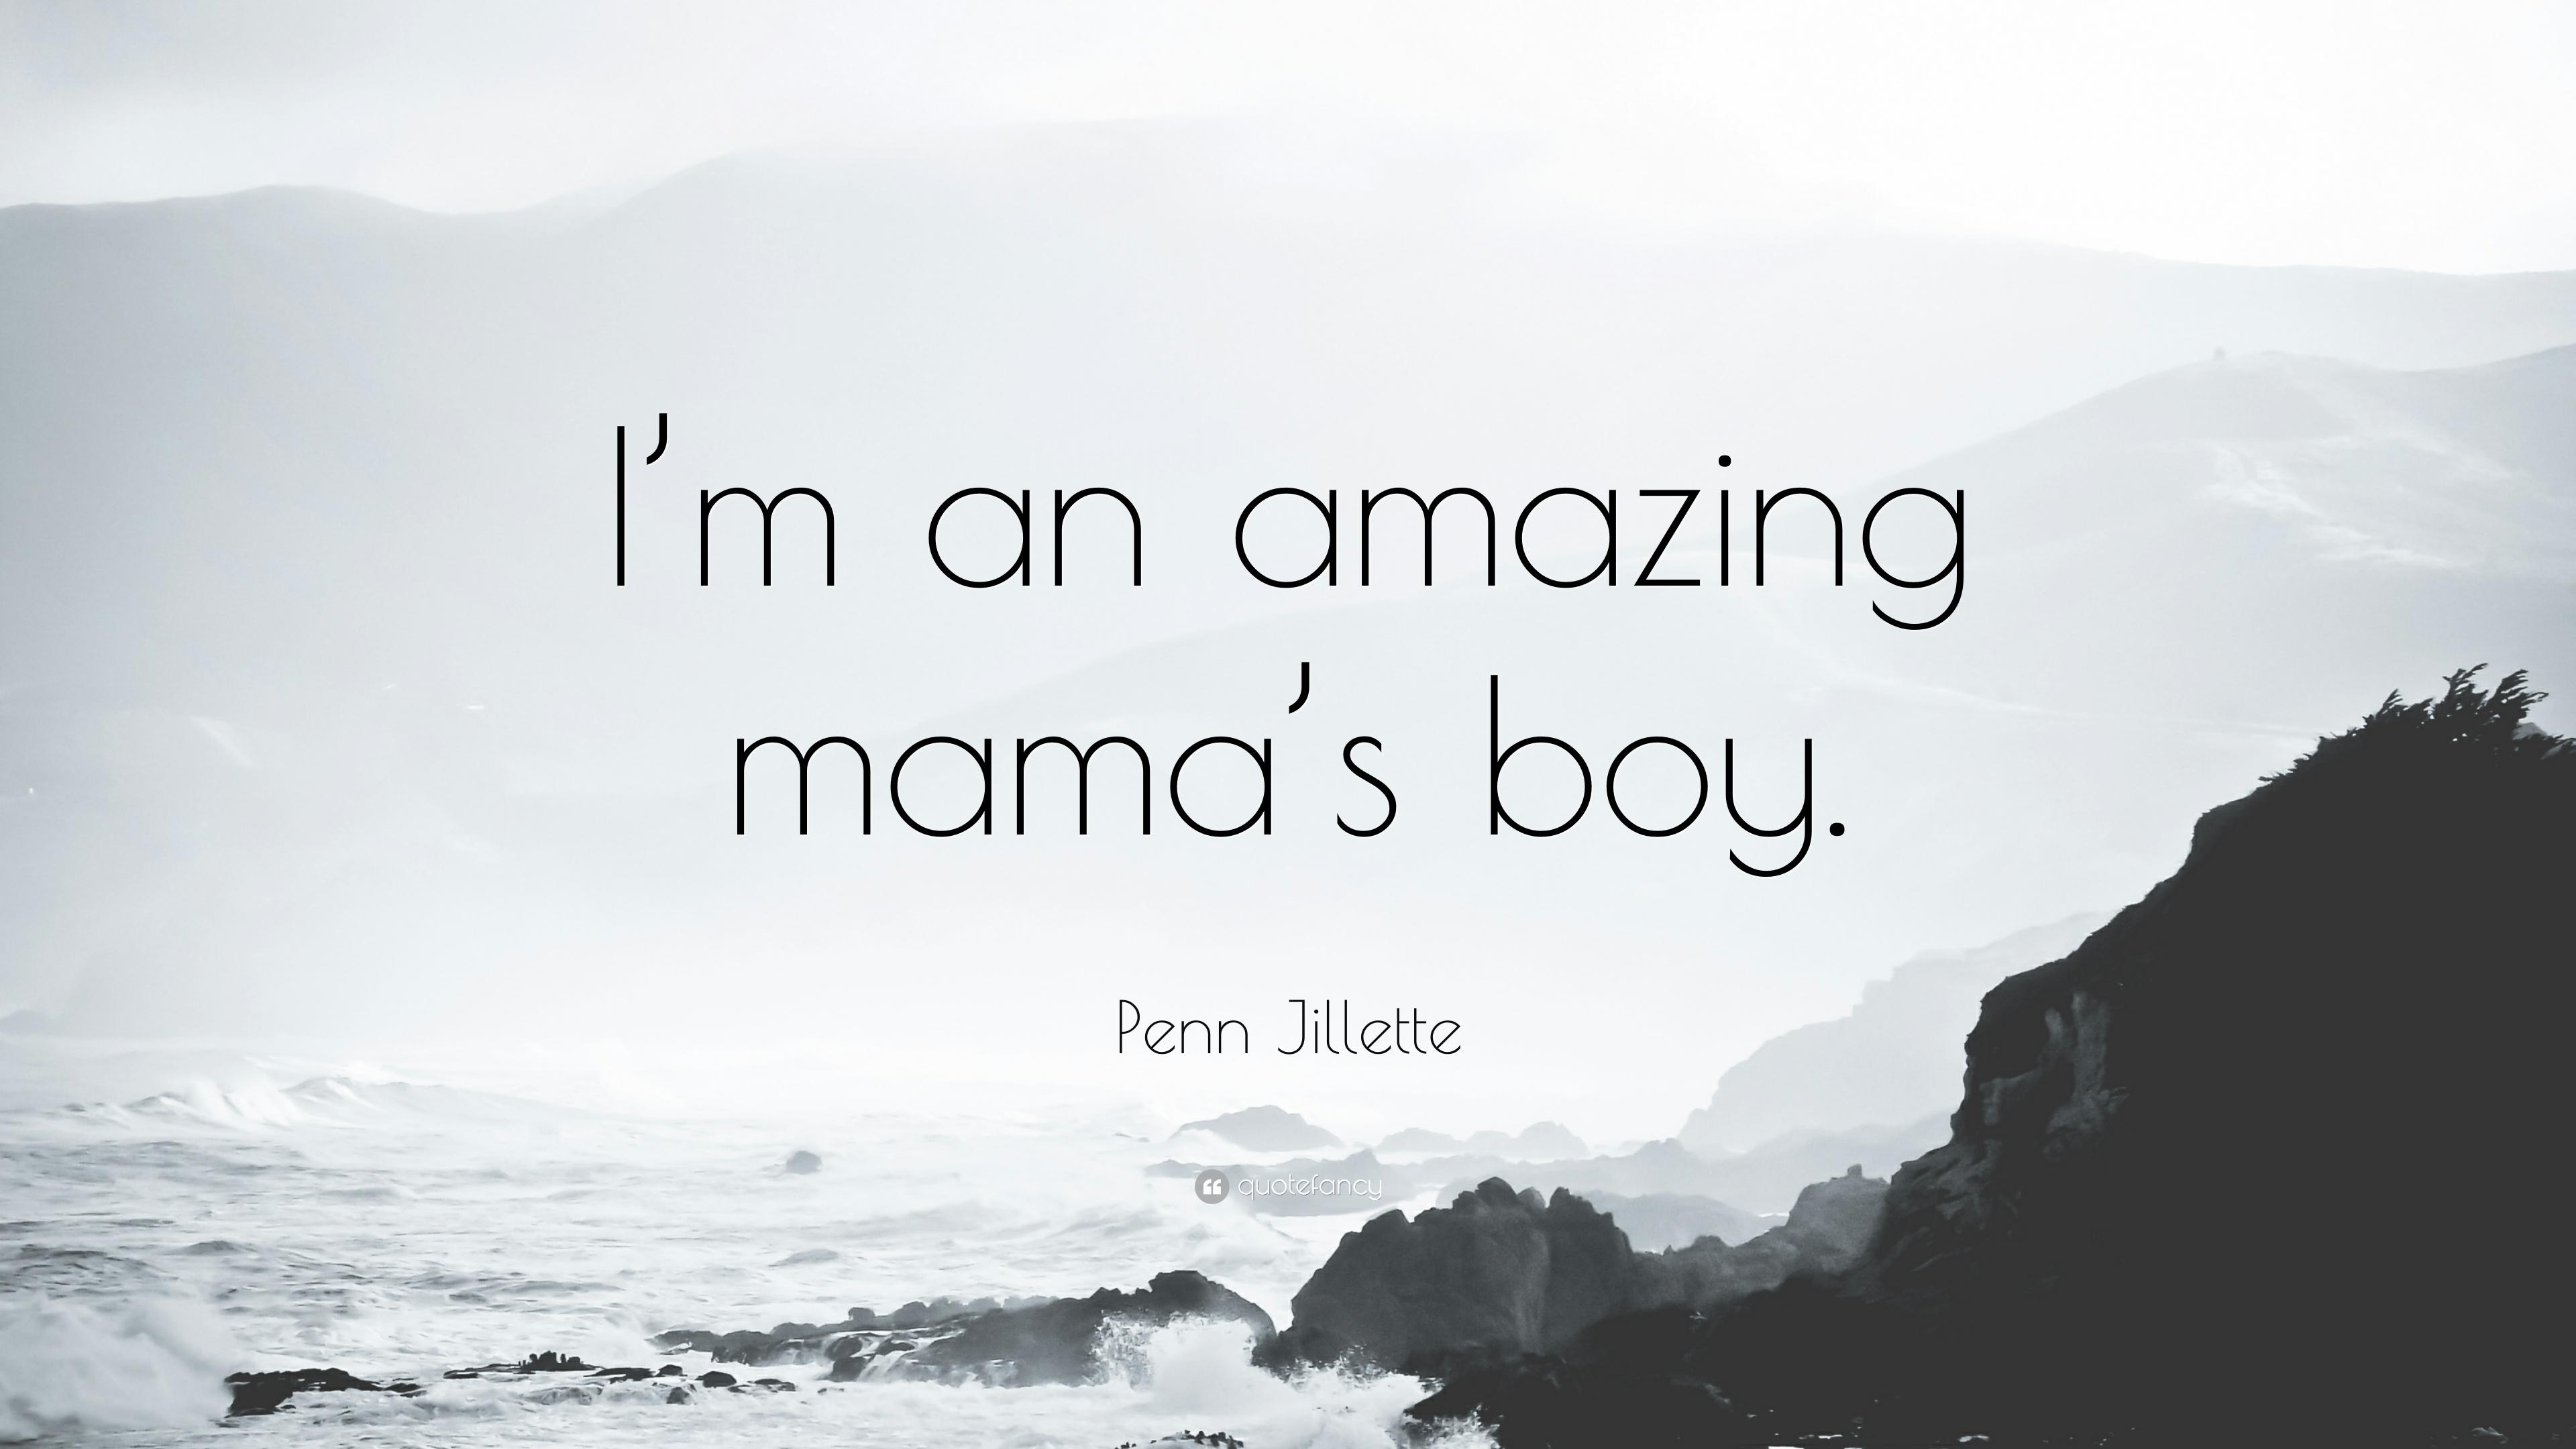 Penn Jillette Quote: “I'm an amazing mama's boy.” 7 wallpaper